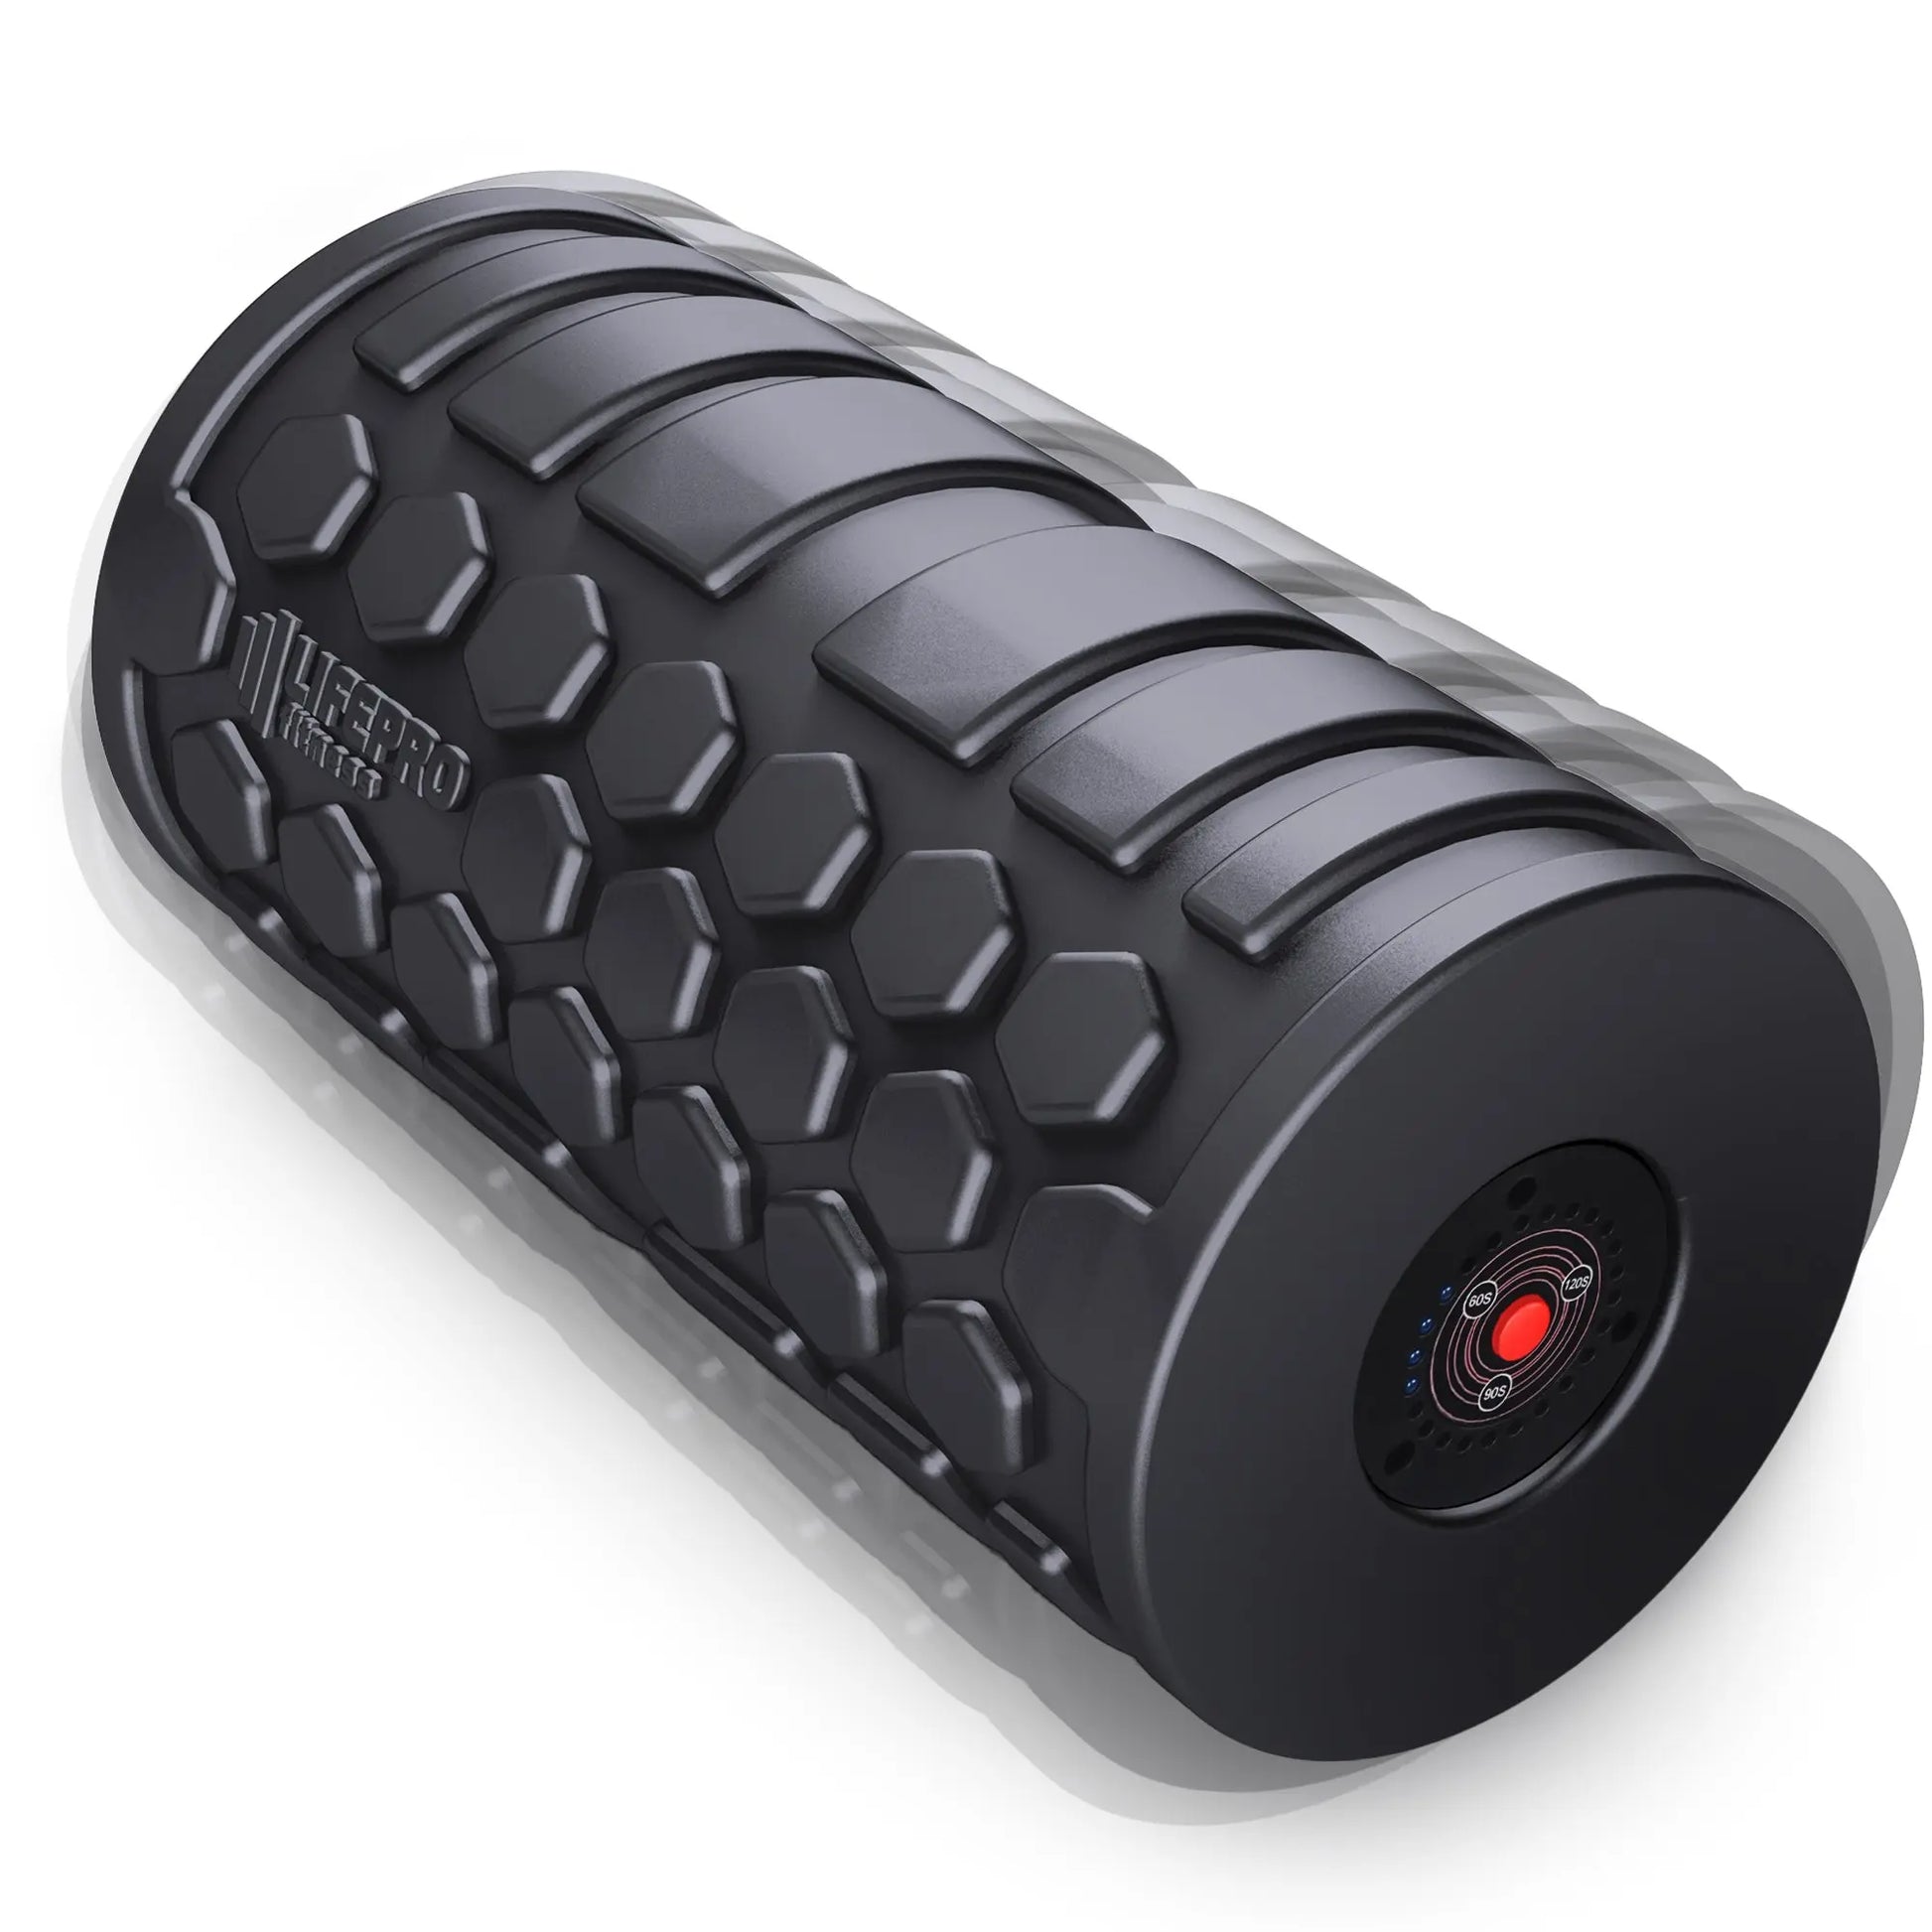  Vive Foam Roller - 12 Inch High Density Massage Stick